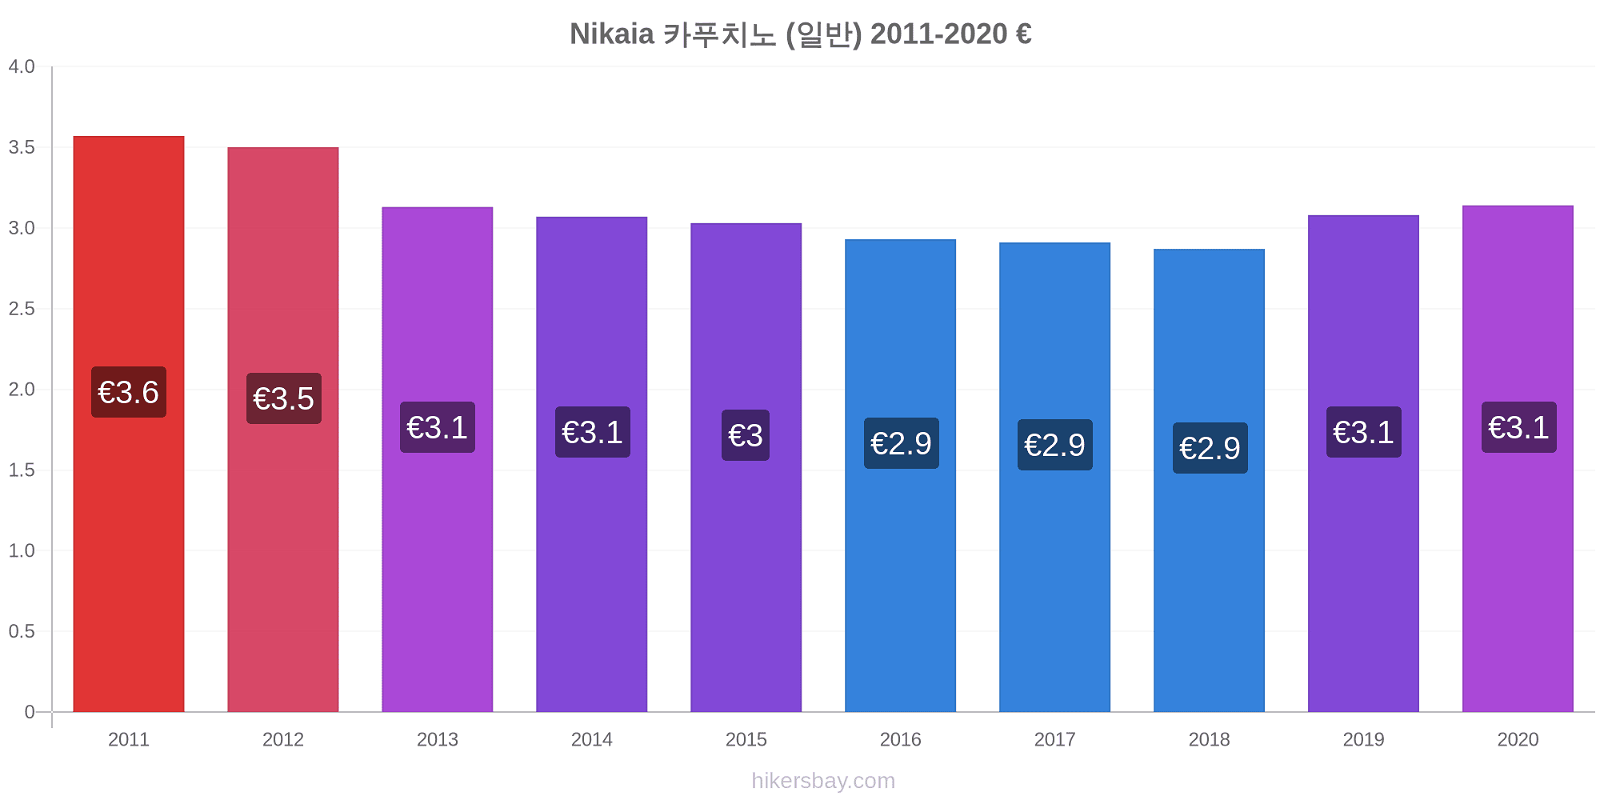 Nikaia 가격 변경 카푸치노 (일반) hikersbay.com